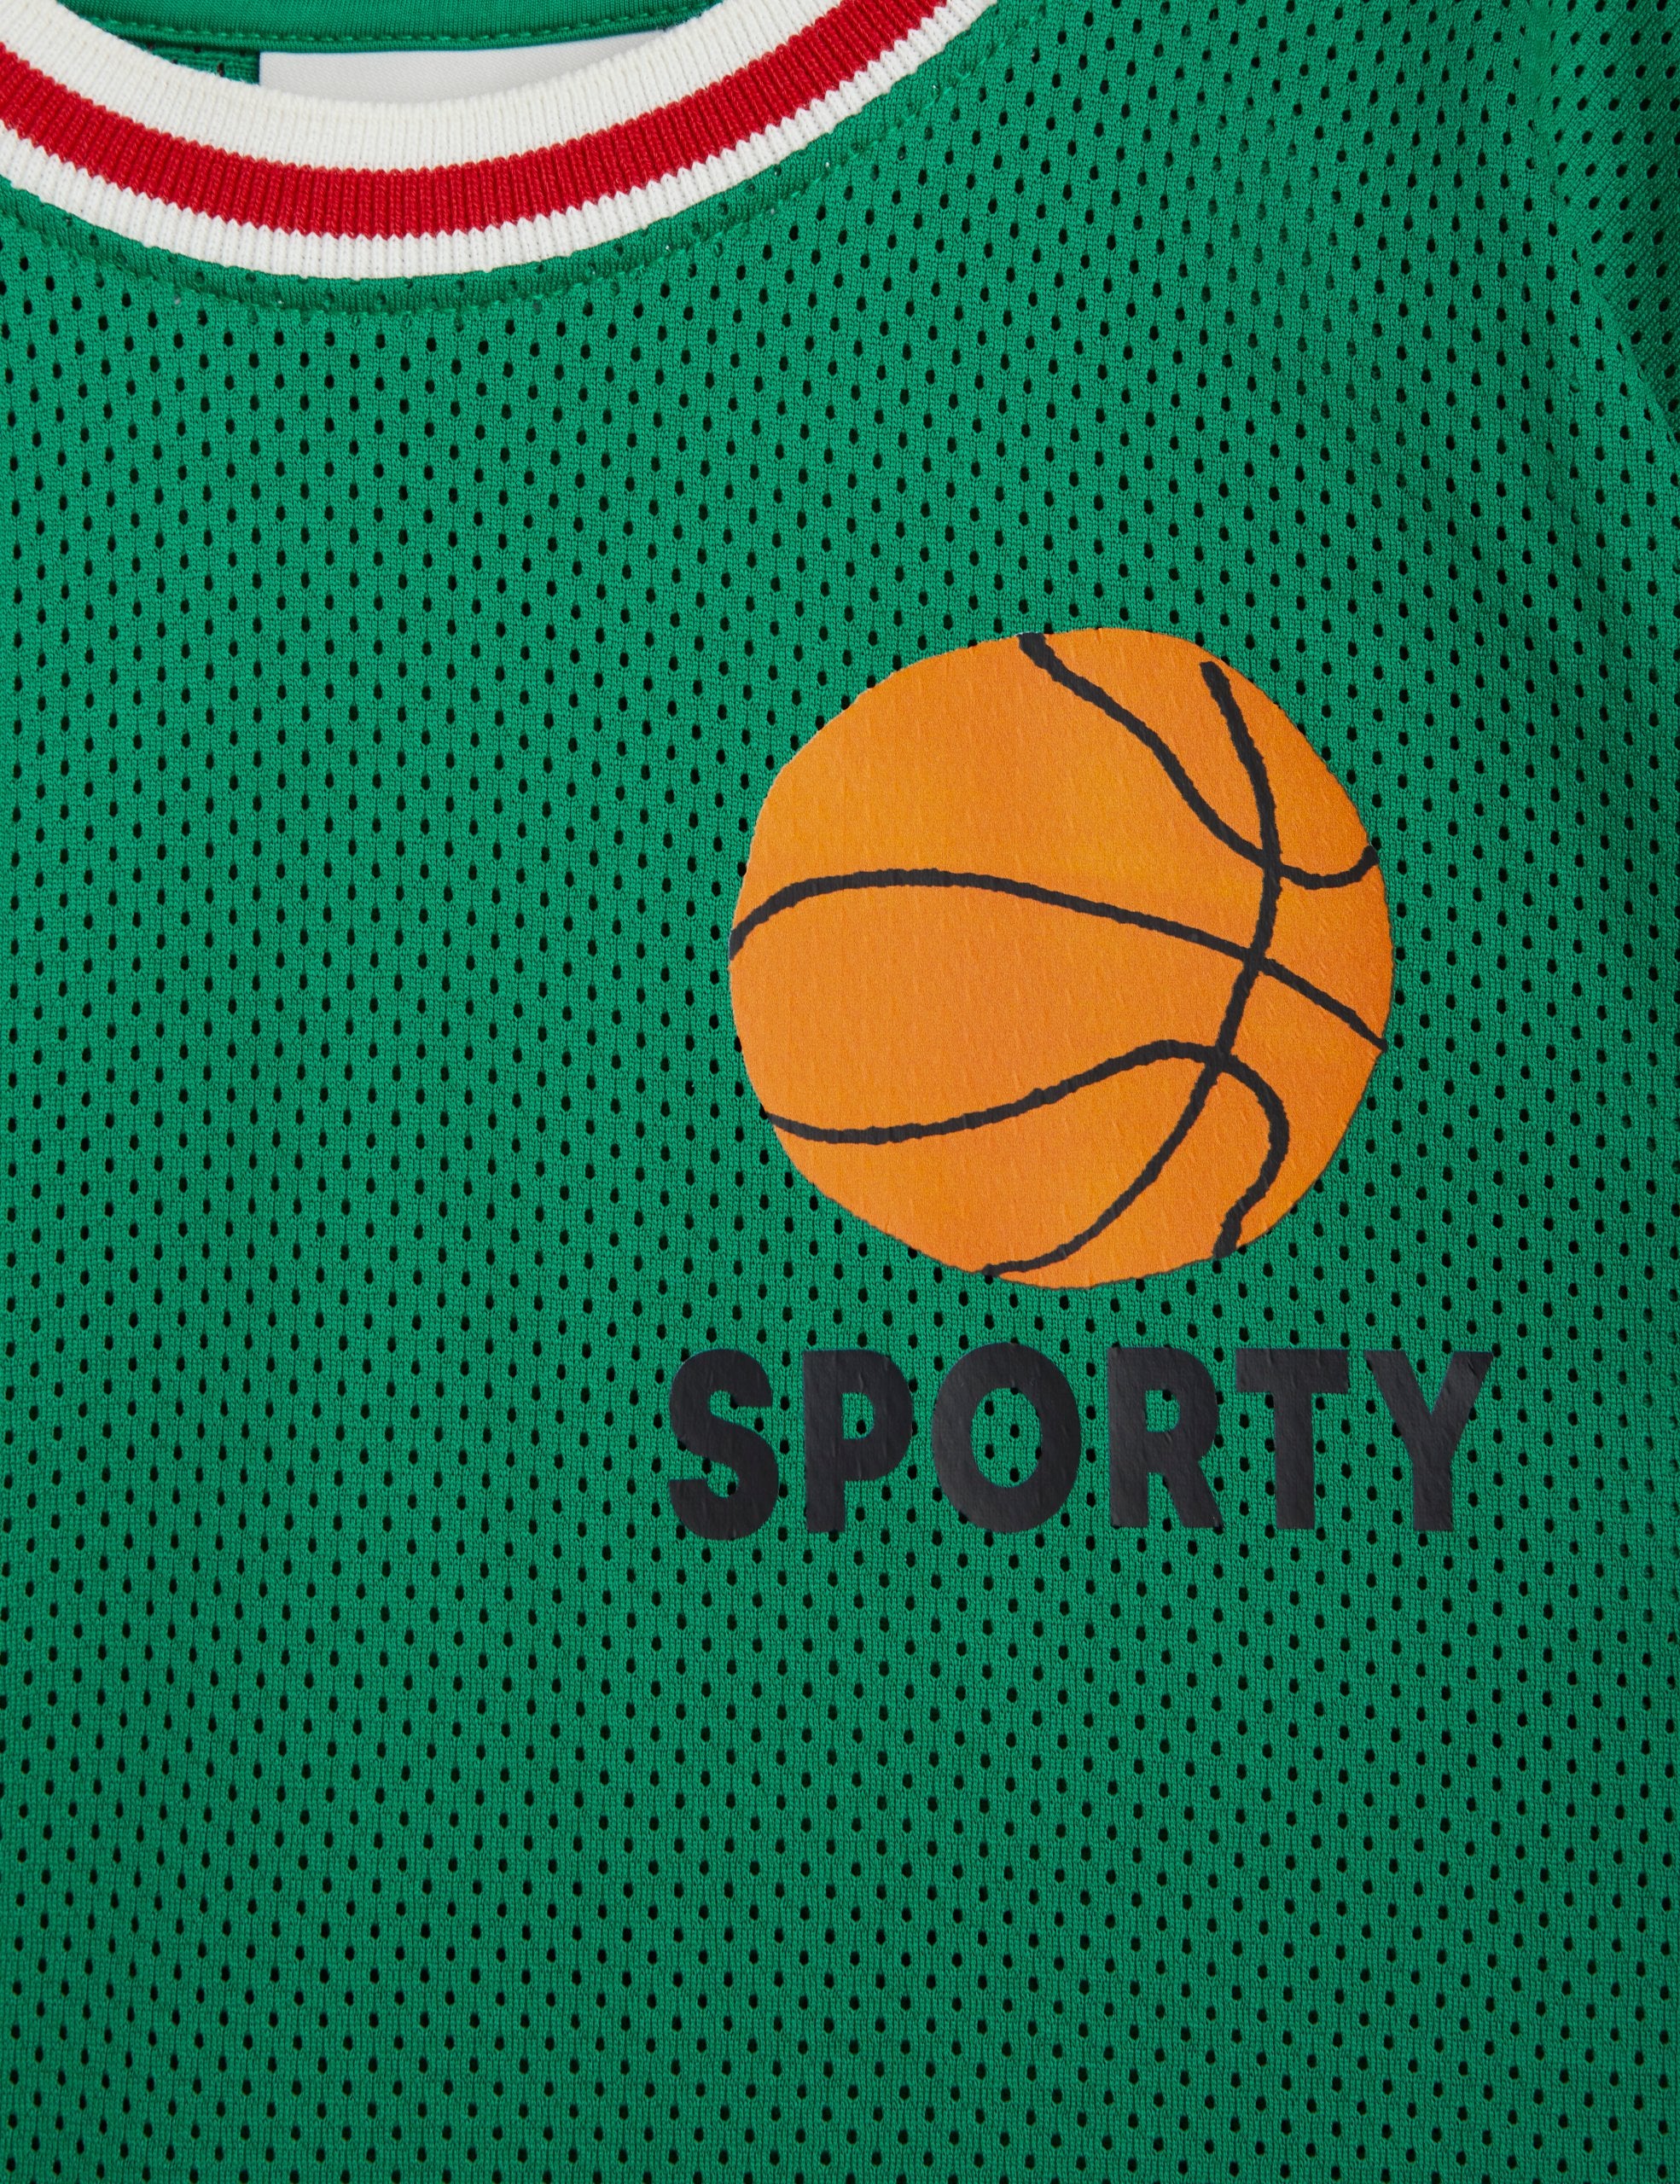 Mini Rodini Basket Mesh Short Sleeve Tee - Green